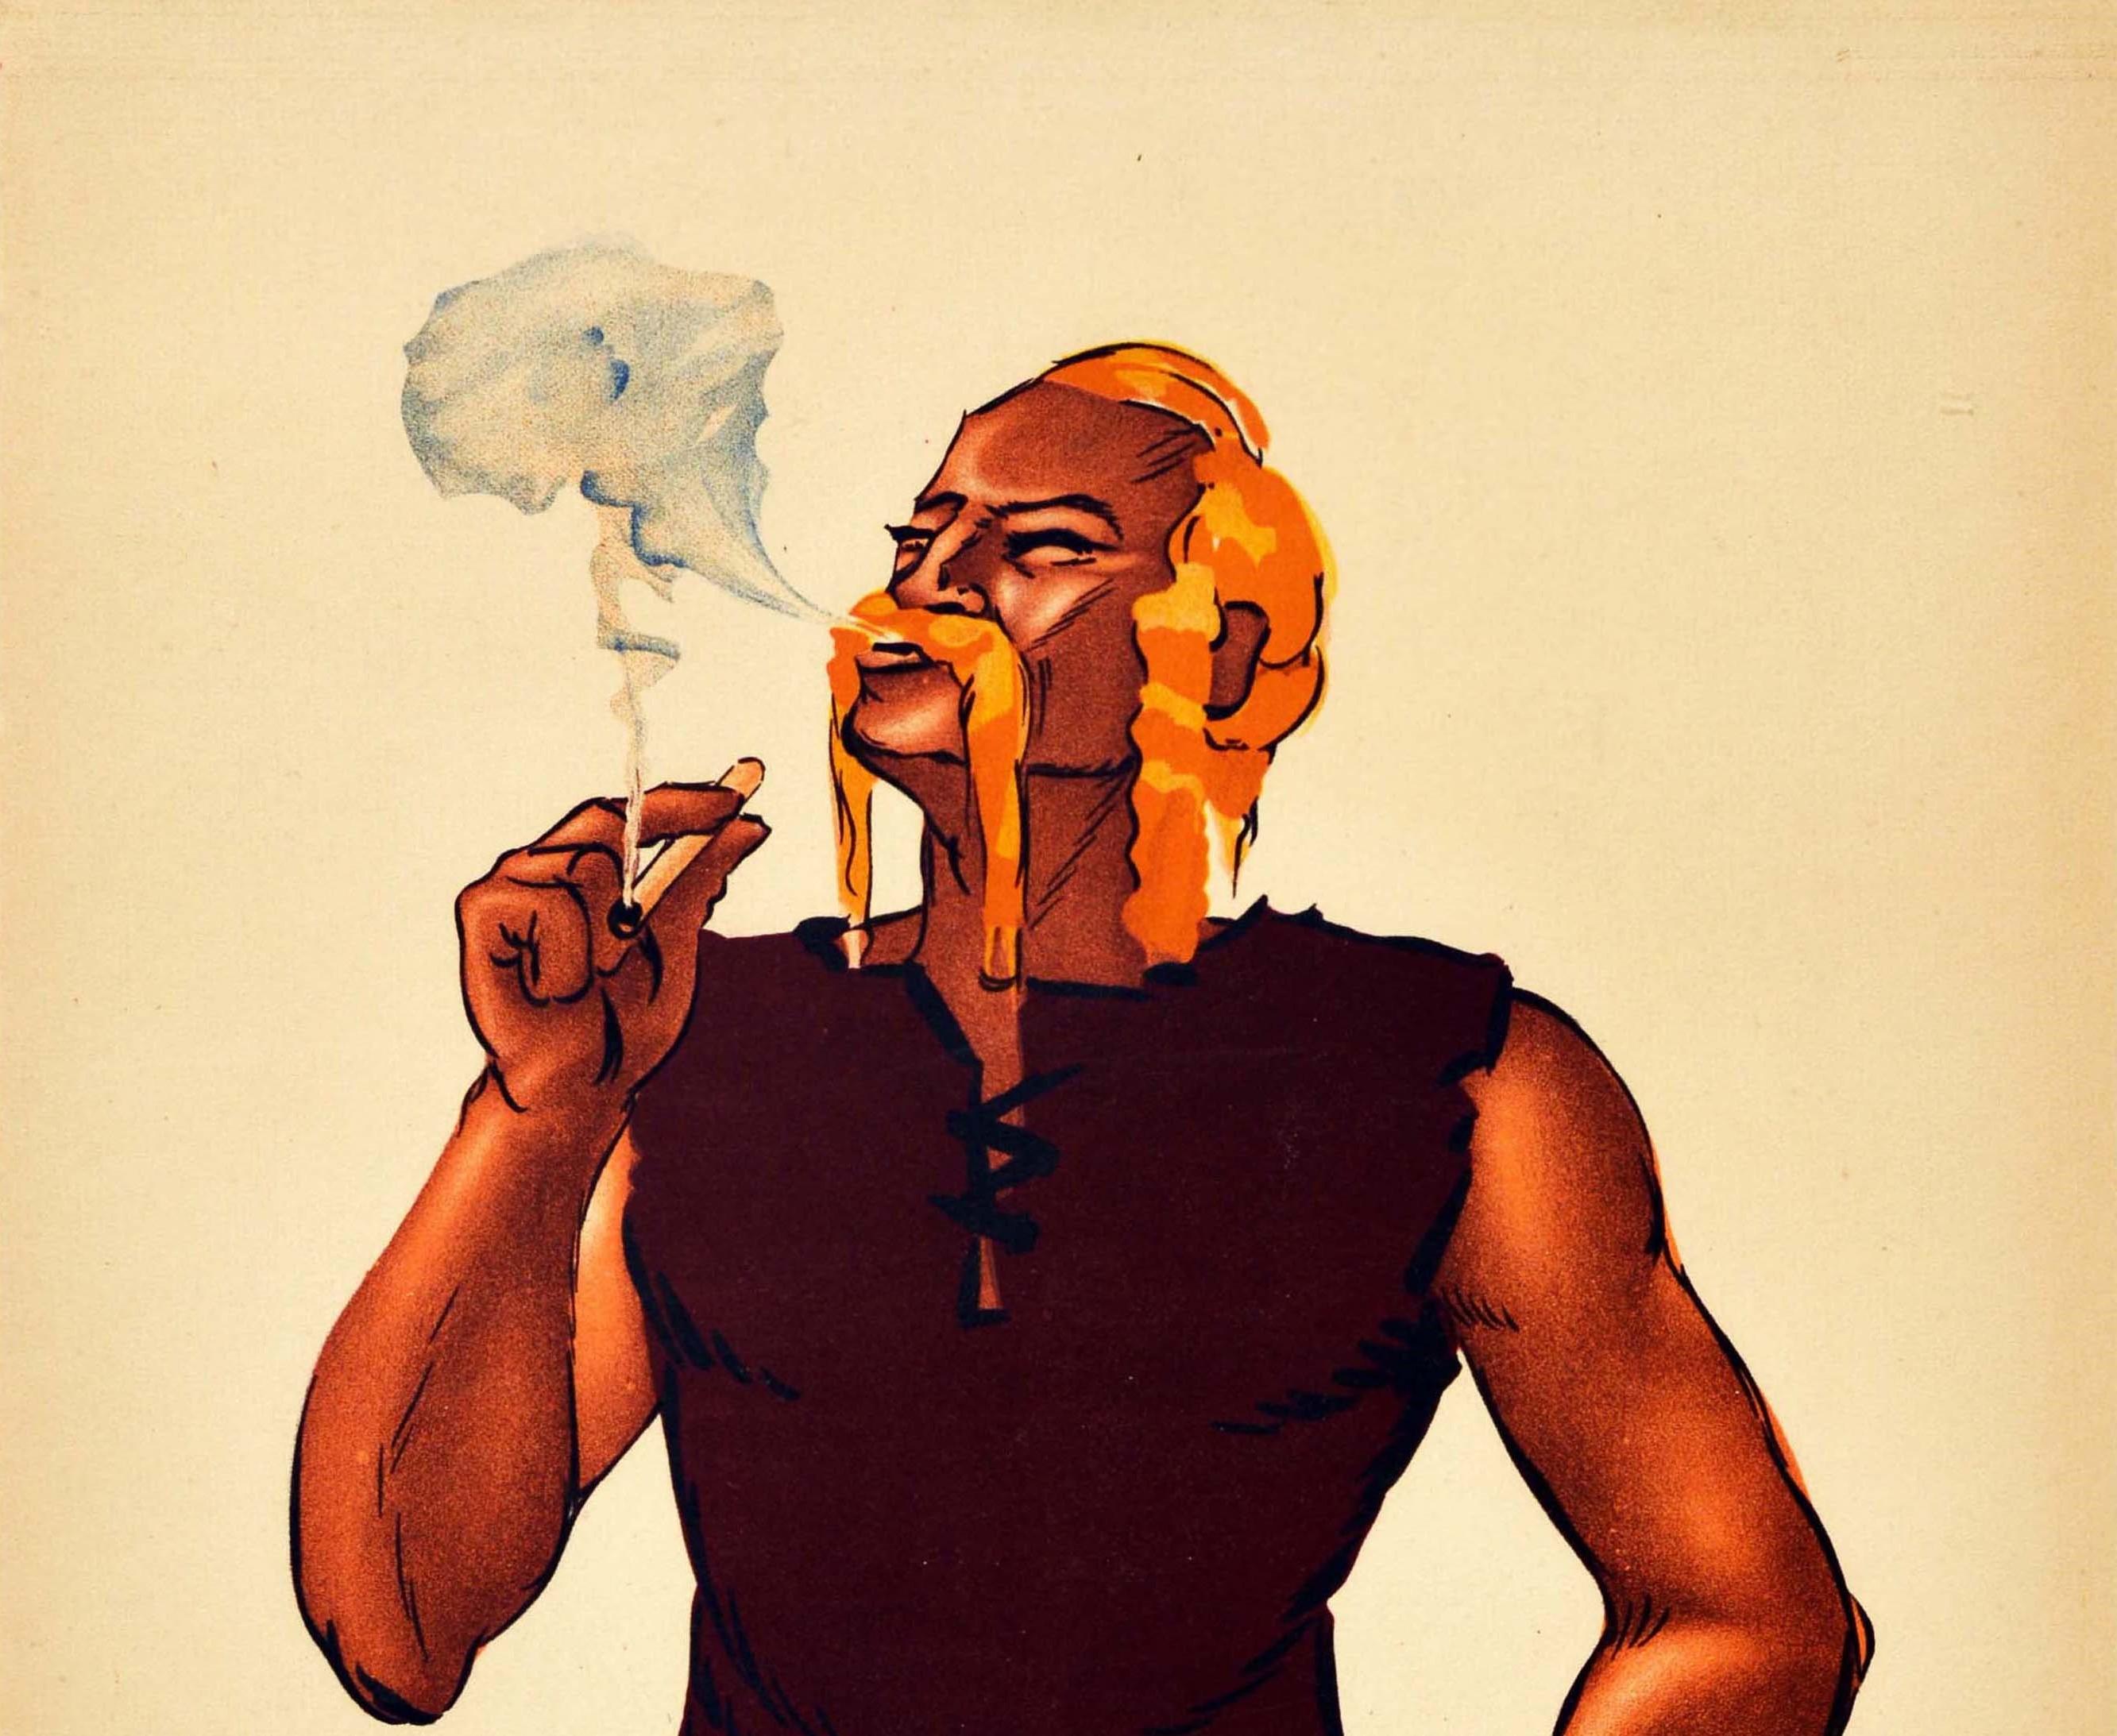 Original Vintage Poster Cigarettes Celtiques French Tobacco Smoking Man Artwork - Print by Leon Dupin